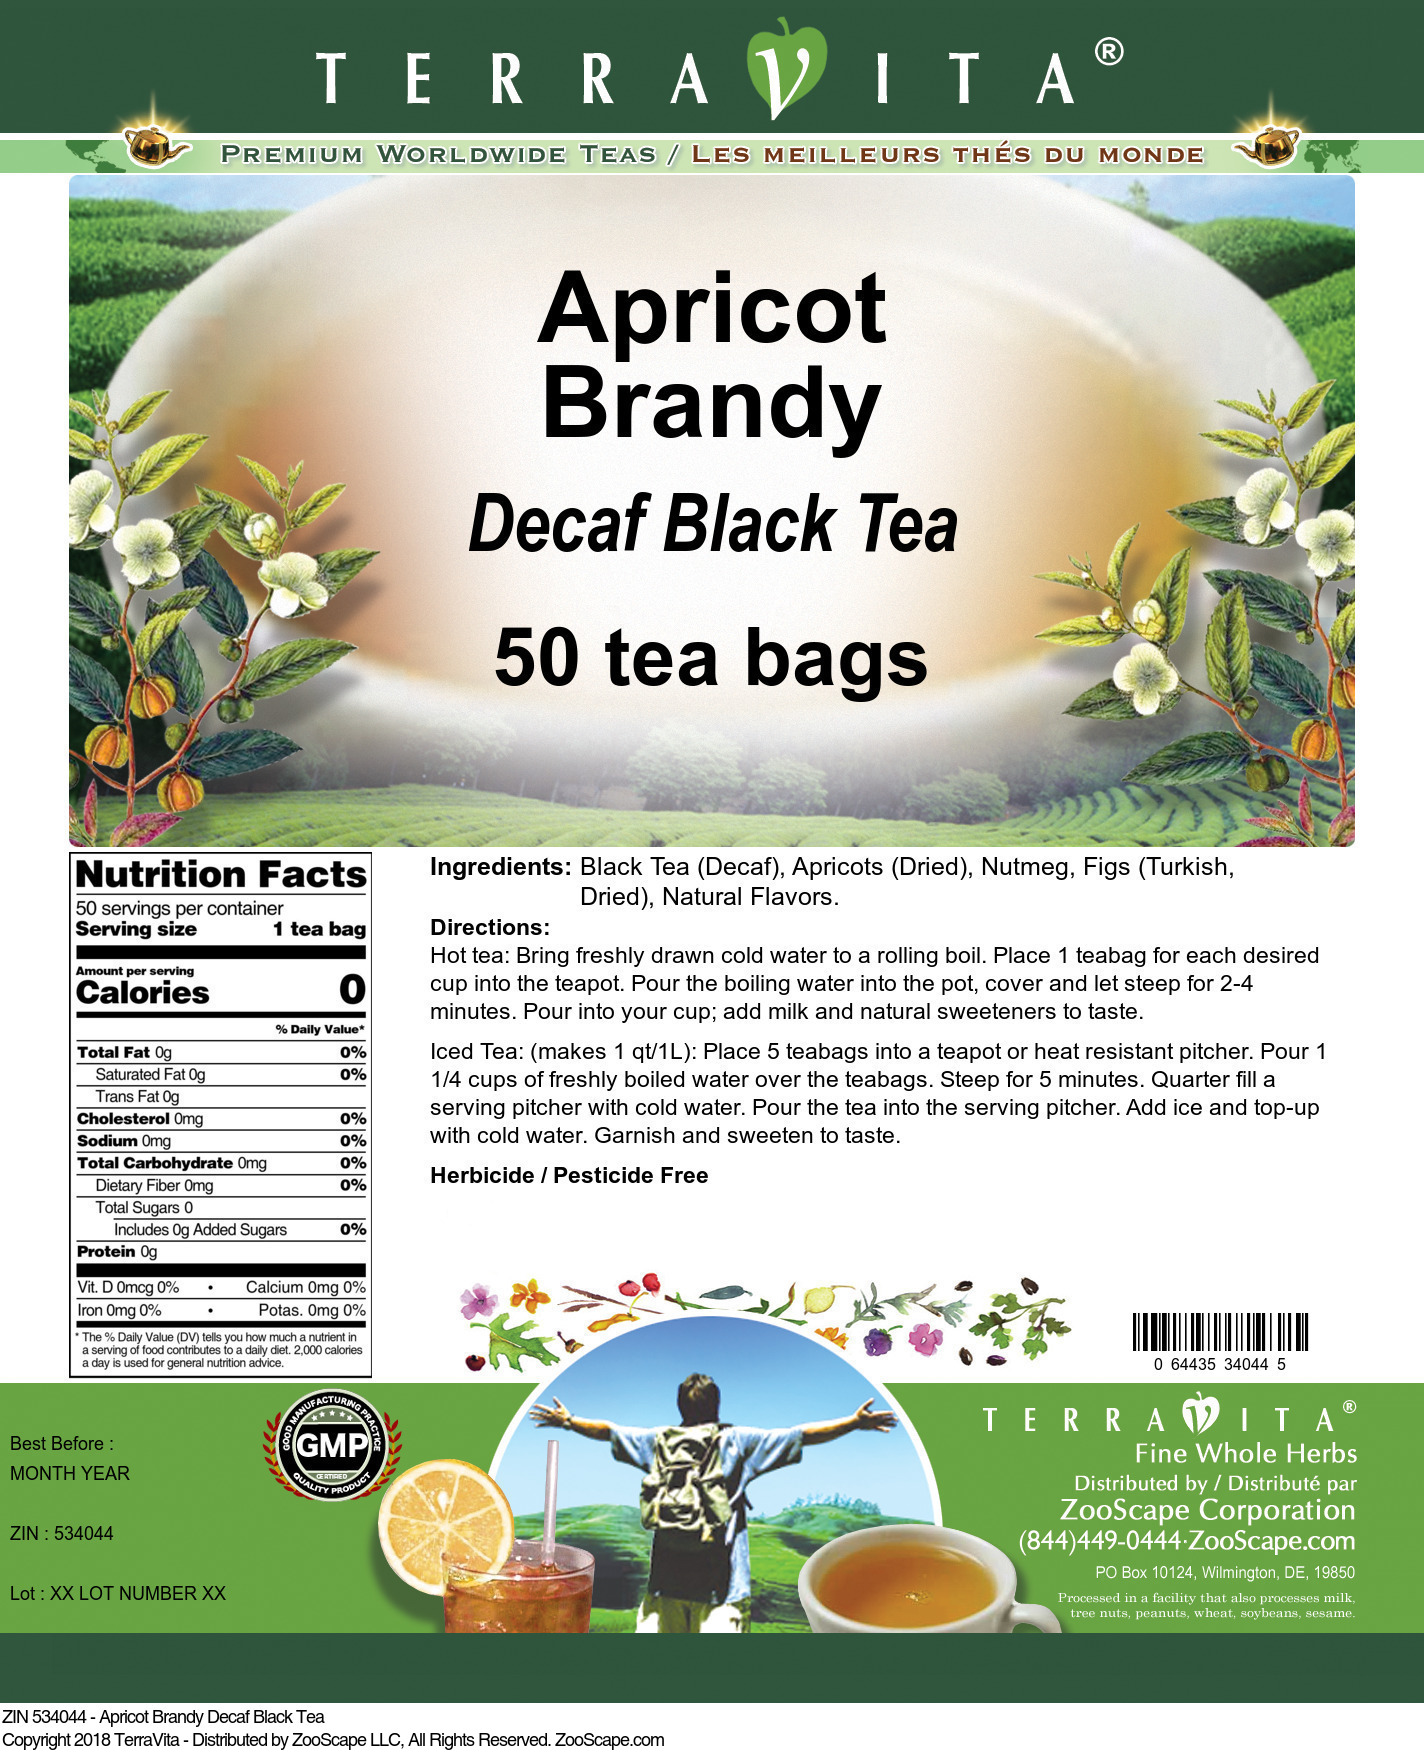 Apricot Brandy Decaf Black Tea - Label